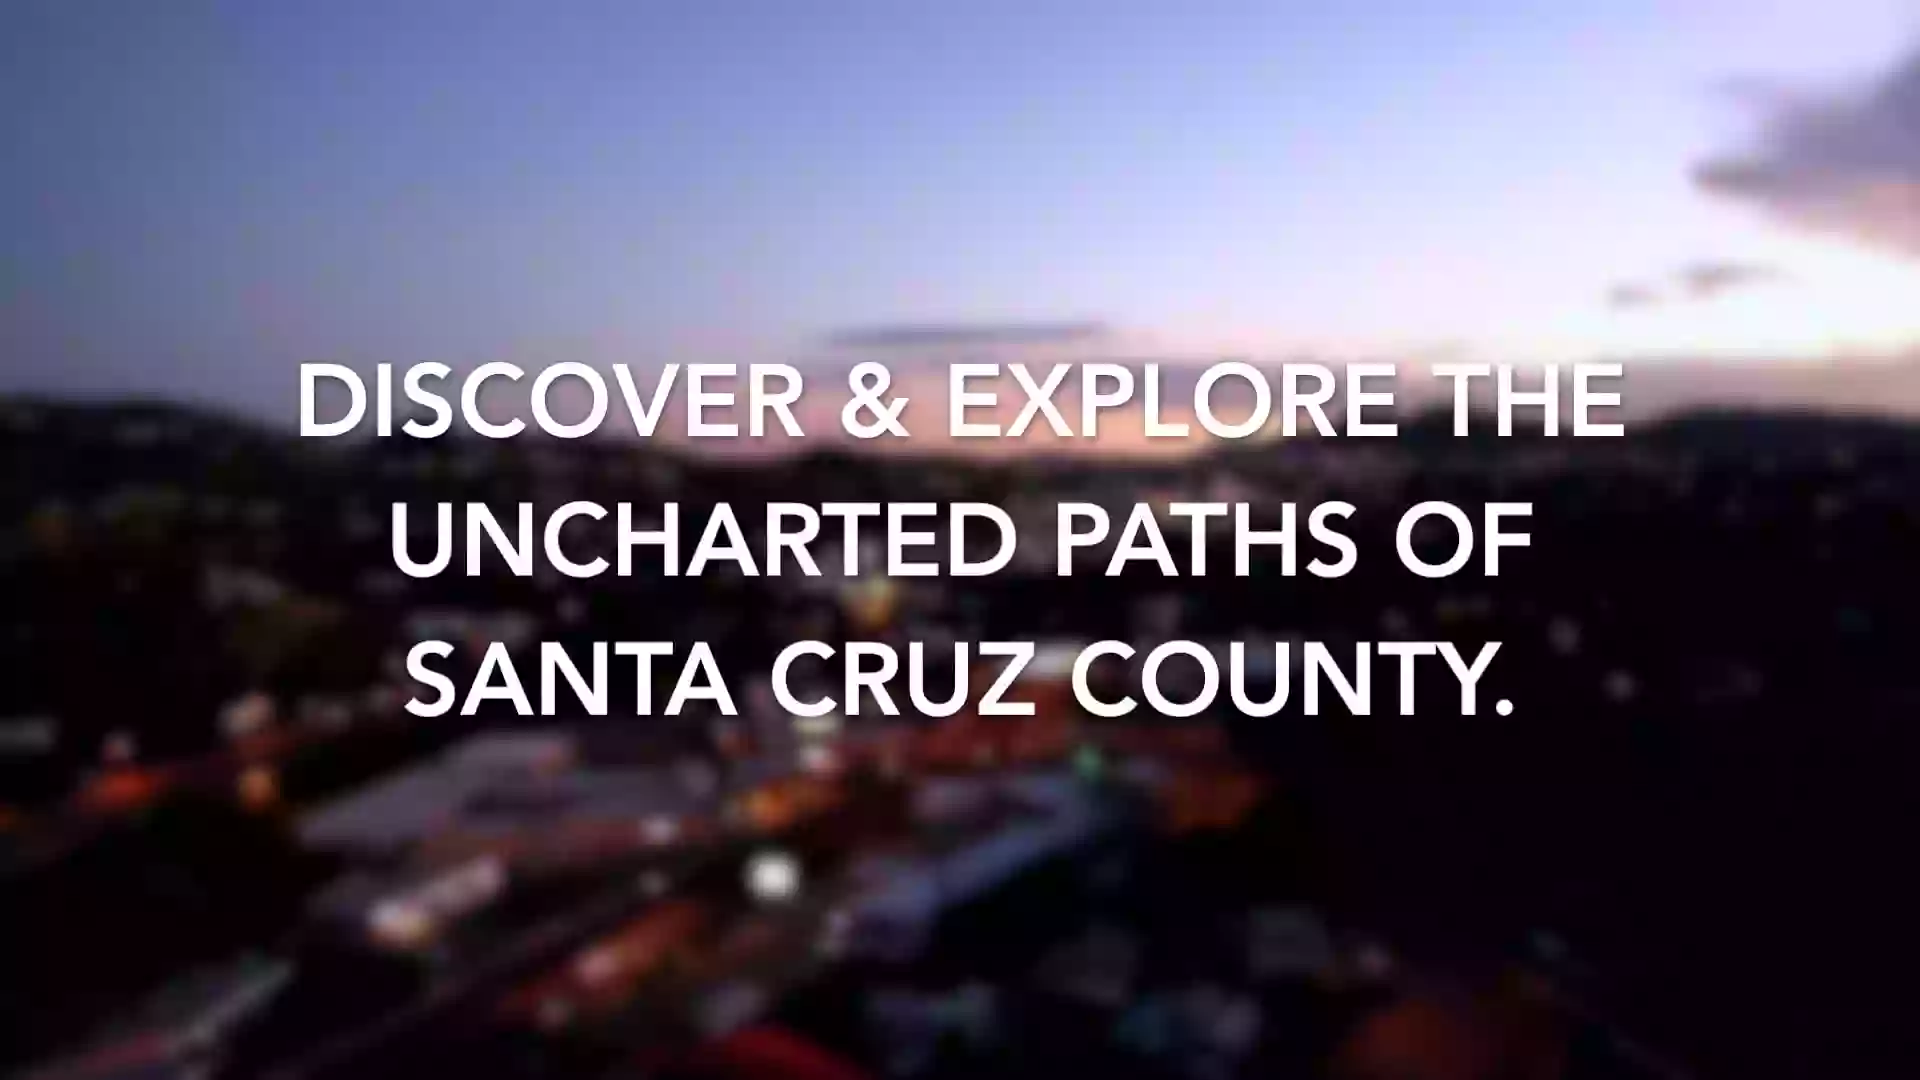 Nogales-Santa Cruz County Chamber of Commerce & Visitor Center